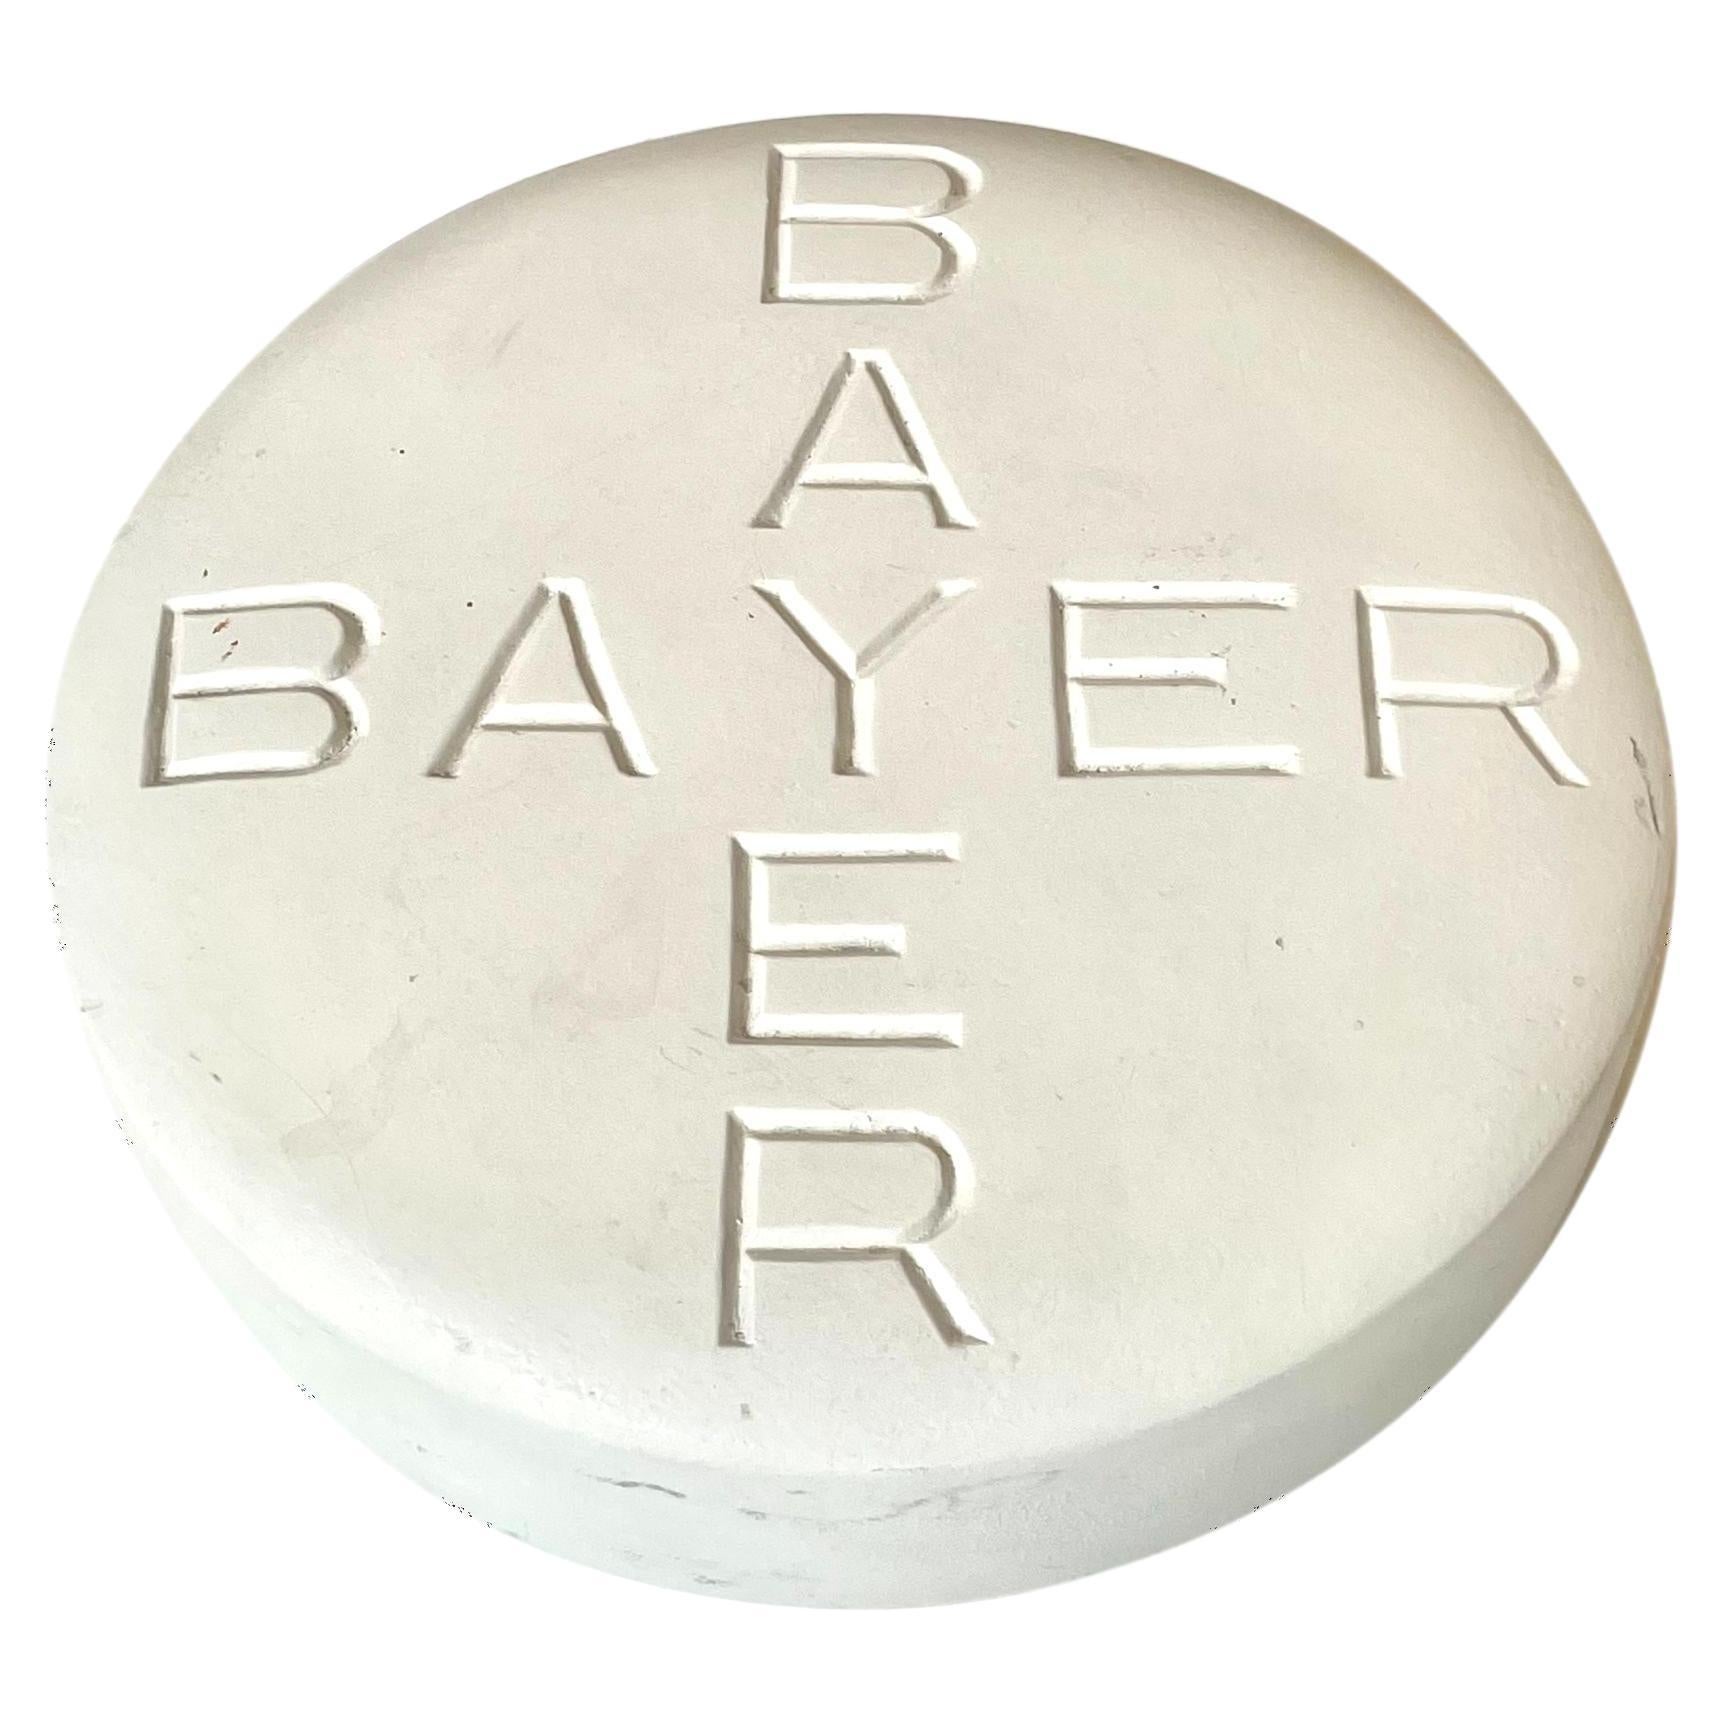 Giant Bayer Pill Pop Art For Sale